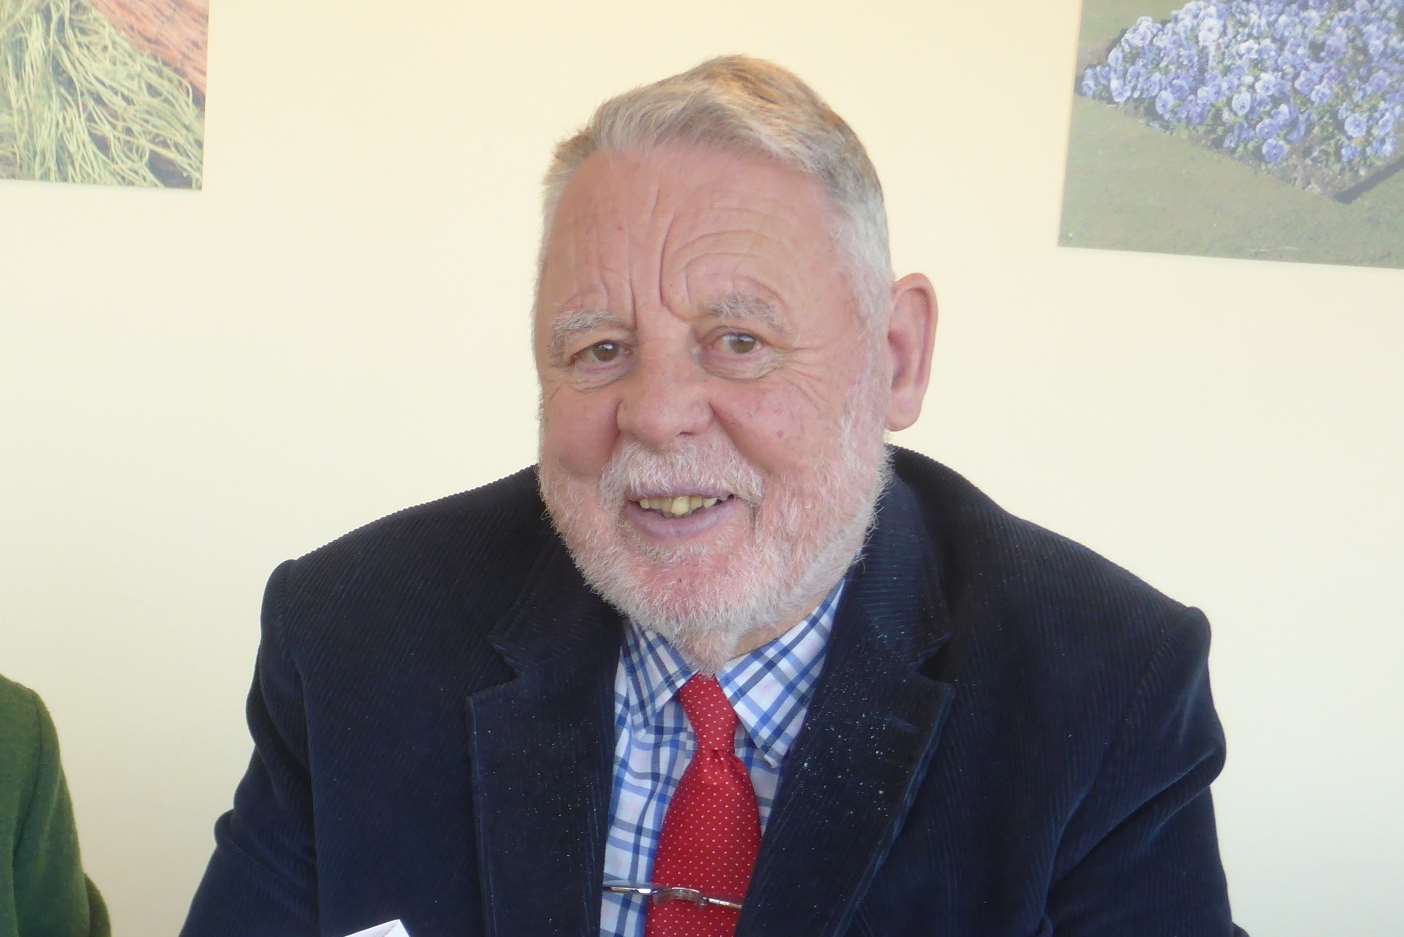 Terry Waite will headline the Chiddingstone Literary Festival